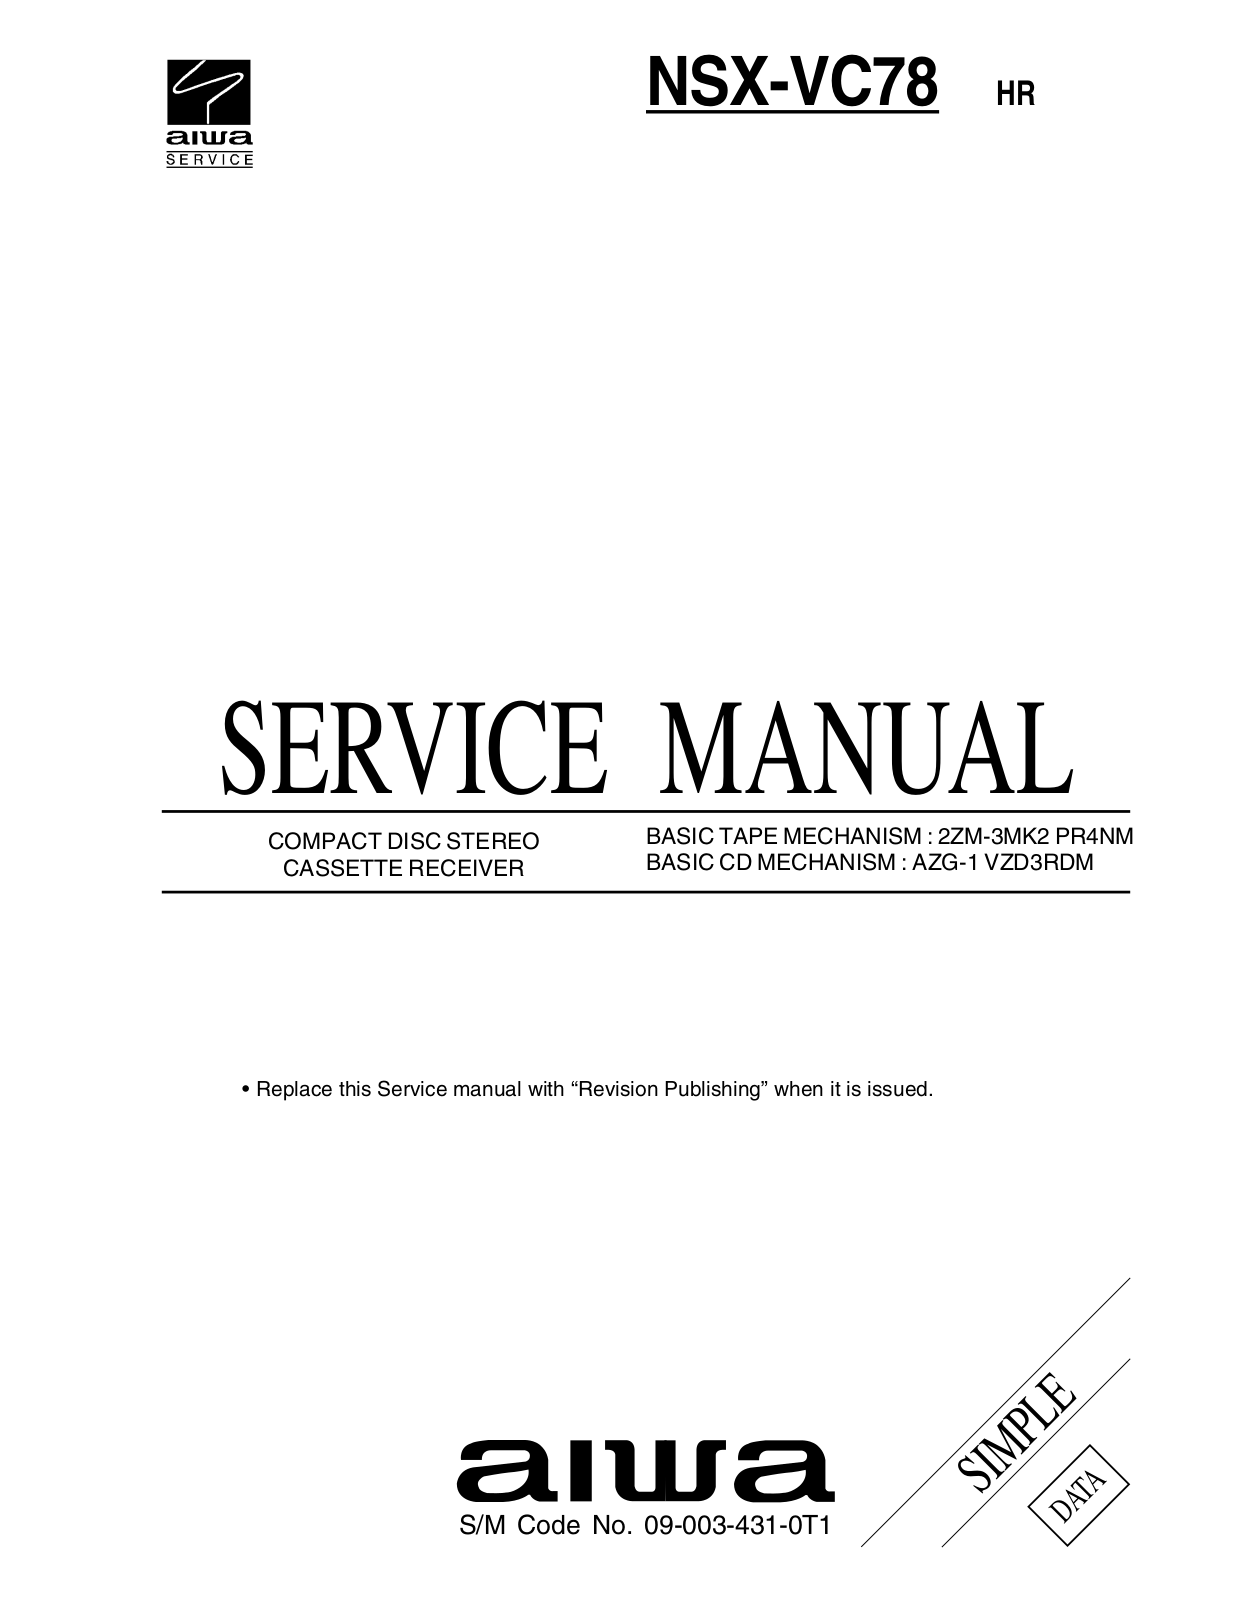 Aiwa NSX-VC78 Service Manual